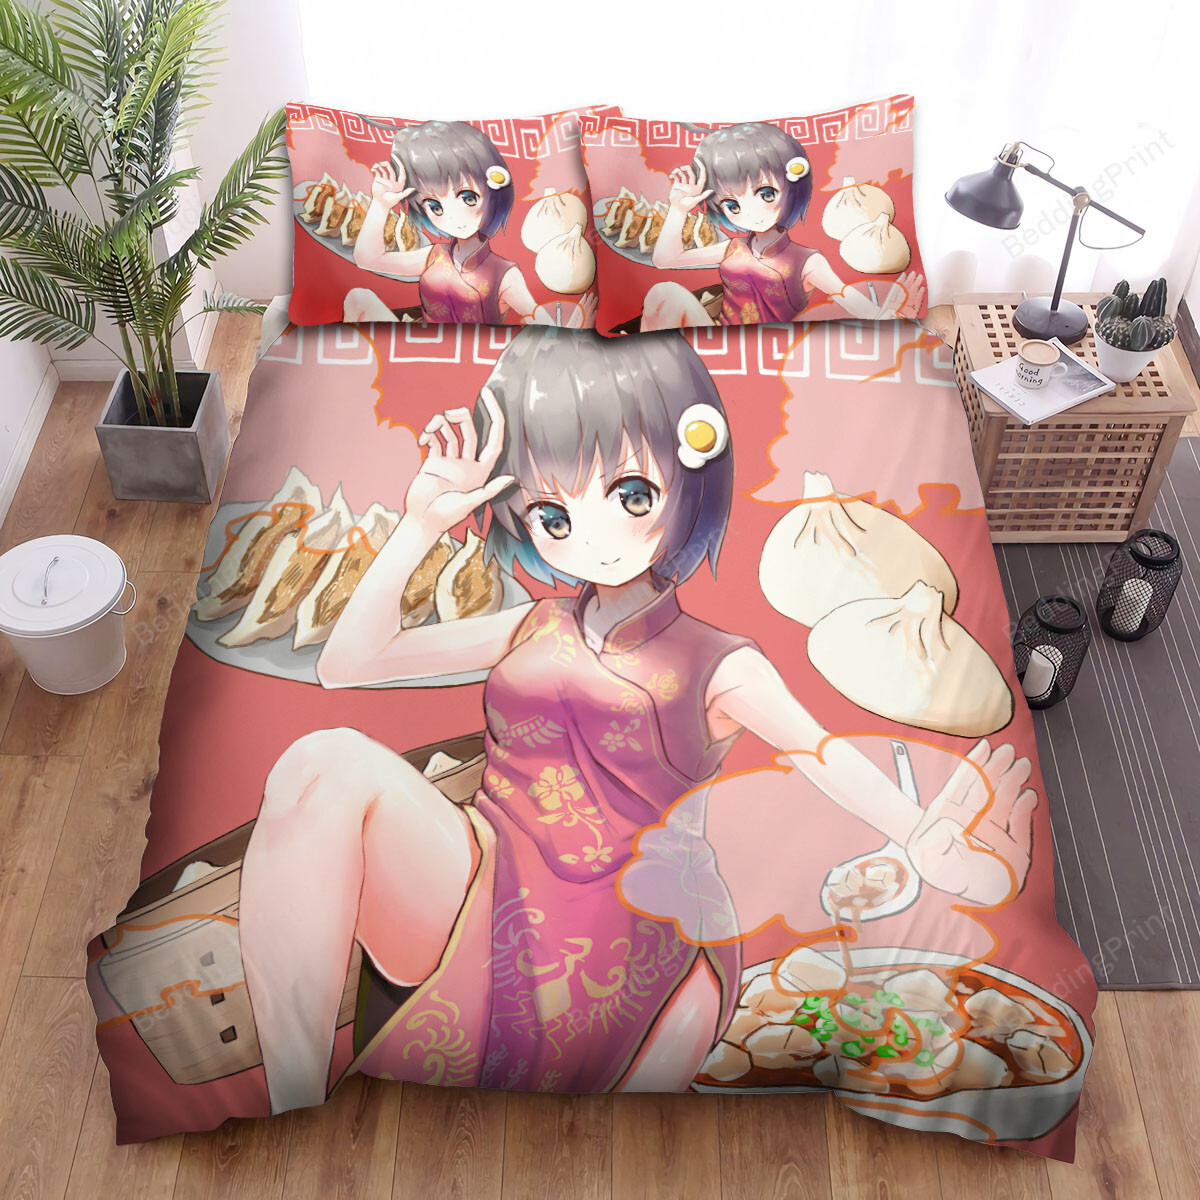 Monogatari Araragi Tsukihi & Chinese Foods Bed Sheets Spread Duvet Cover Bedding Sets